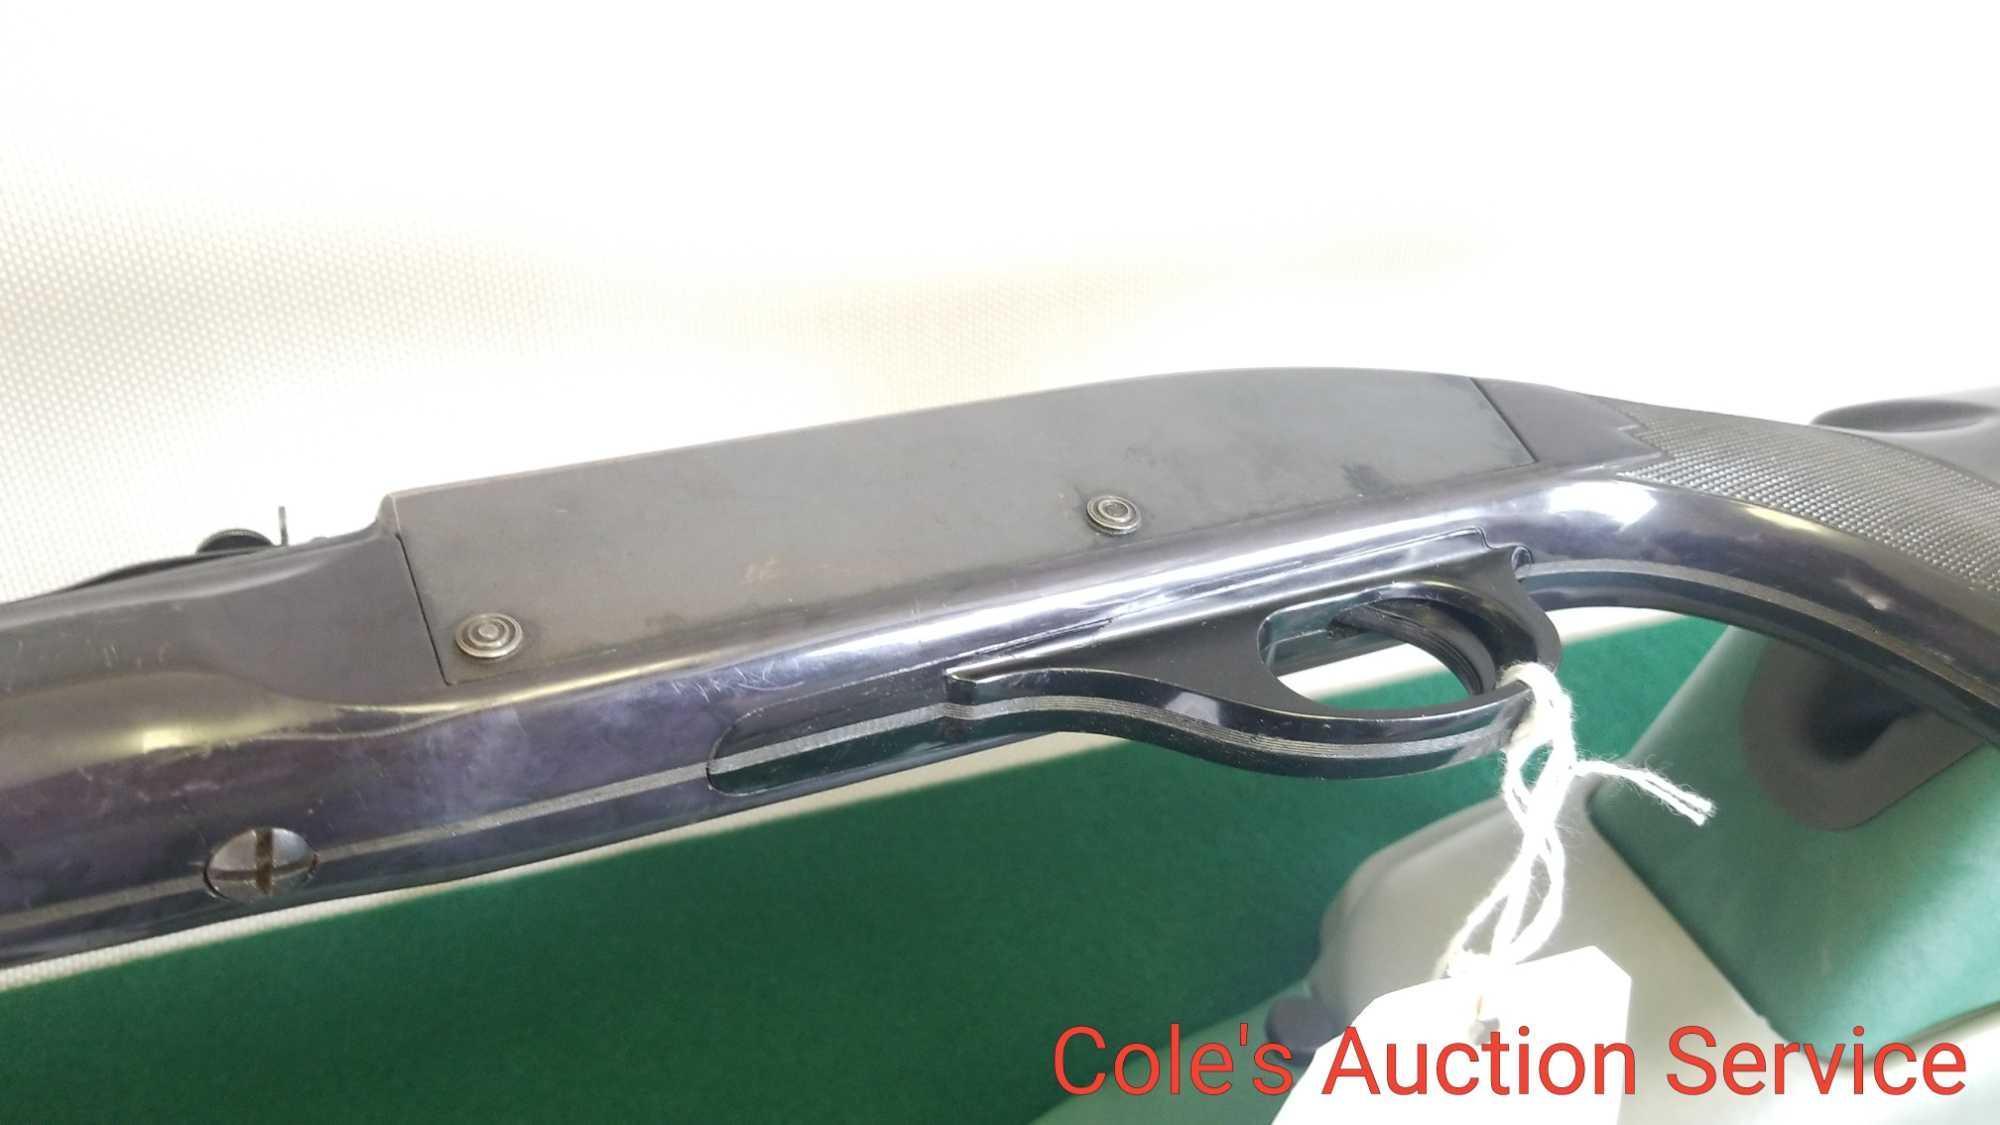 Remington 22 caliber nylon rifle in good condition. Dated 1960, 19.5 inch barrel, Model 66.